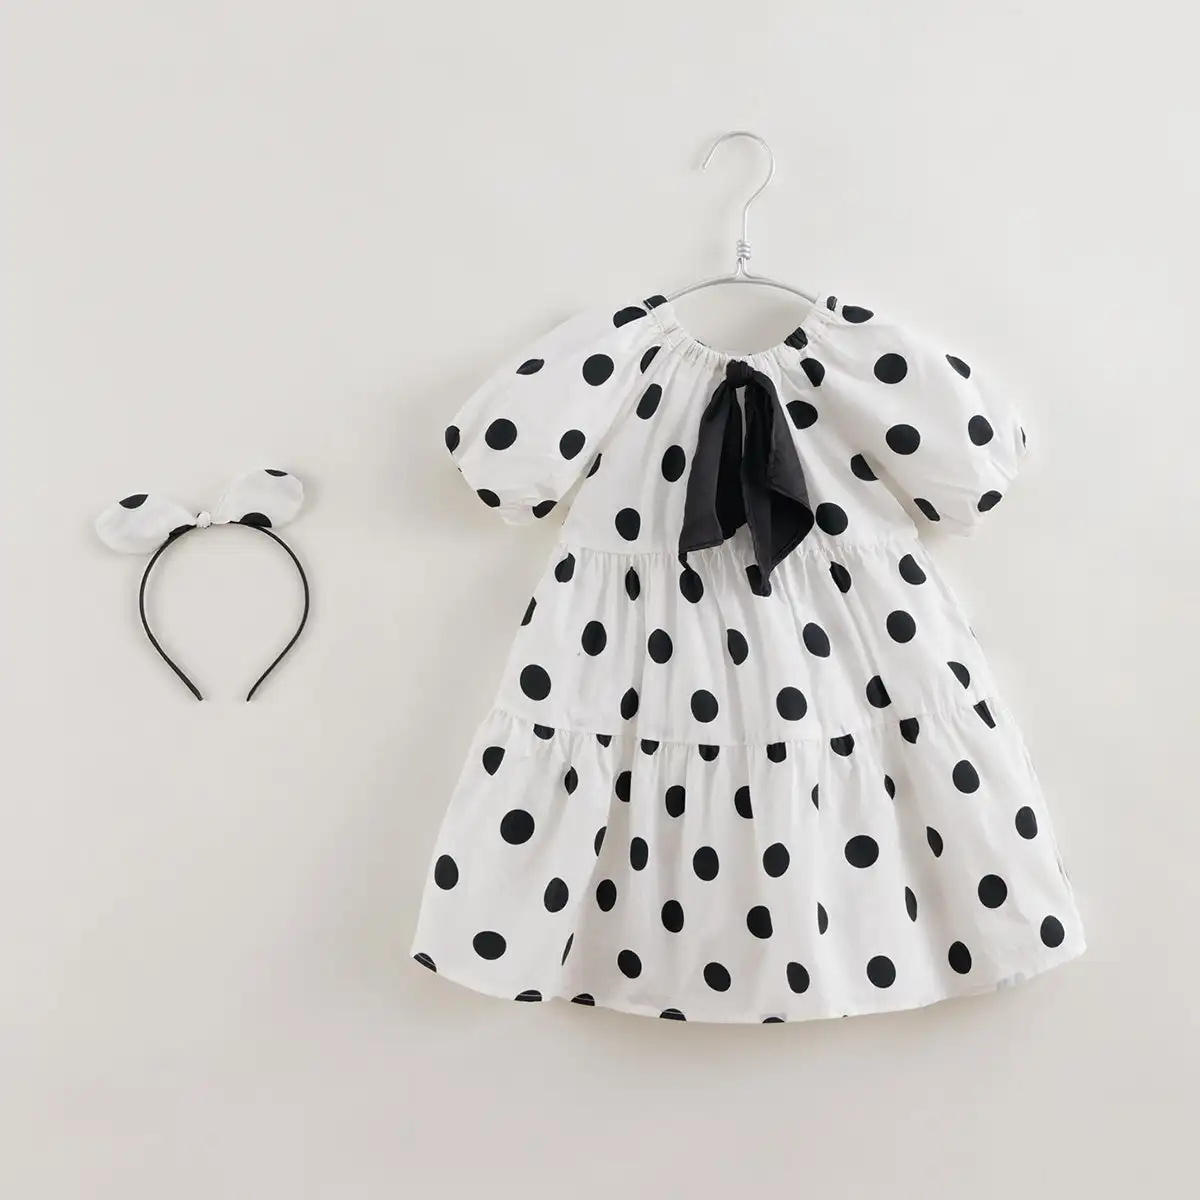 

Marc&janie LUFU French Series Girls' Summer Polka Dot Cotton Dress Toddler Girl Dresses Bow Dress Wholesale Bulk Clothes 220676